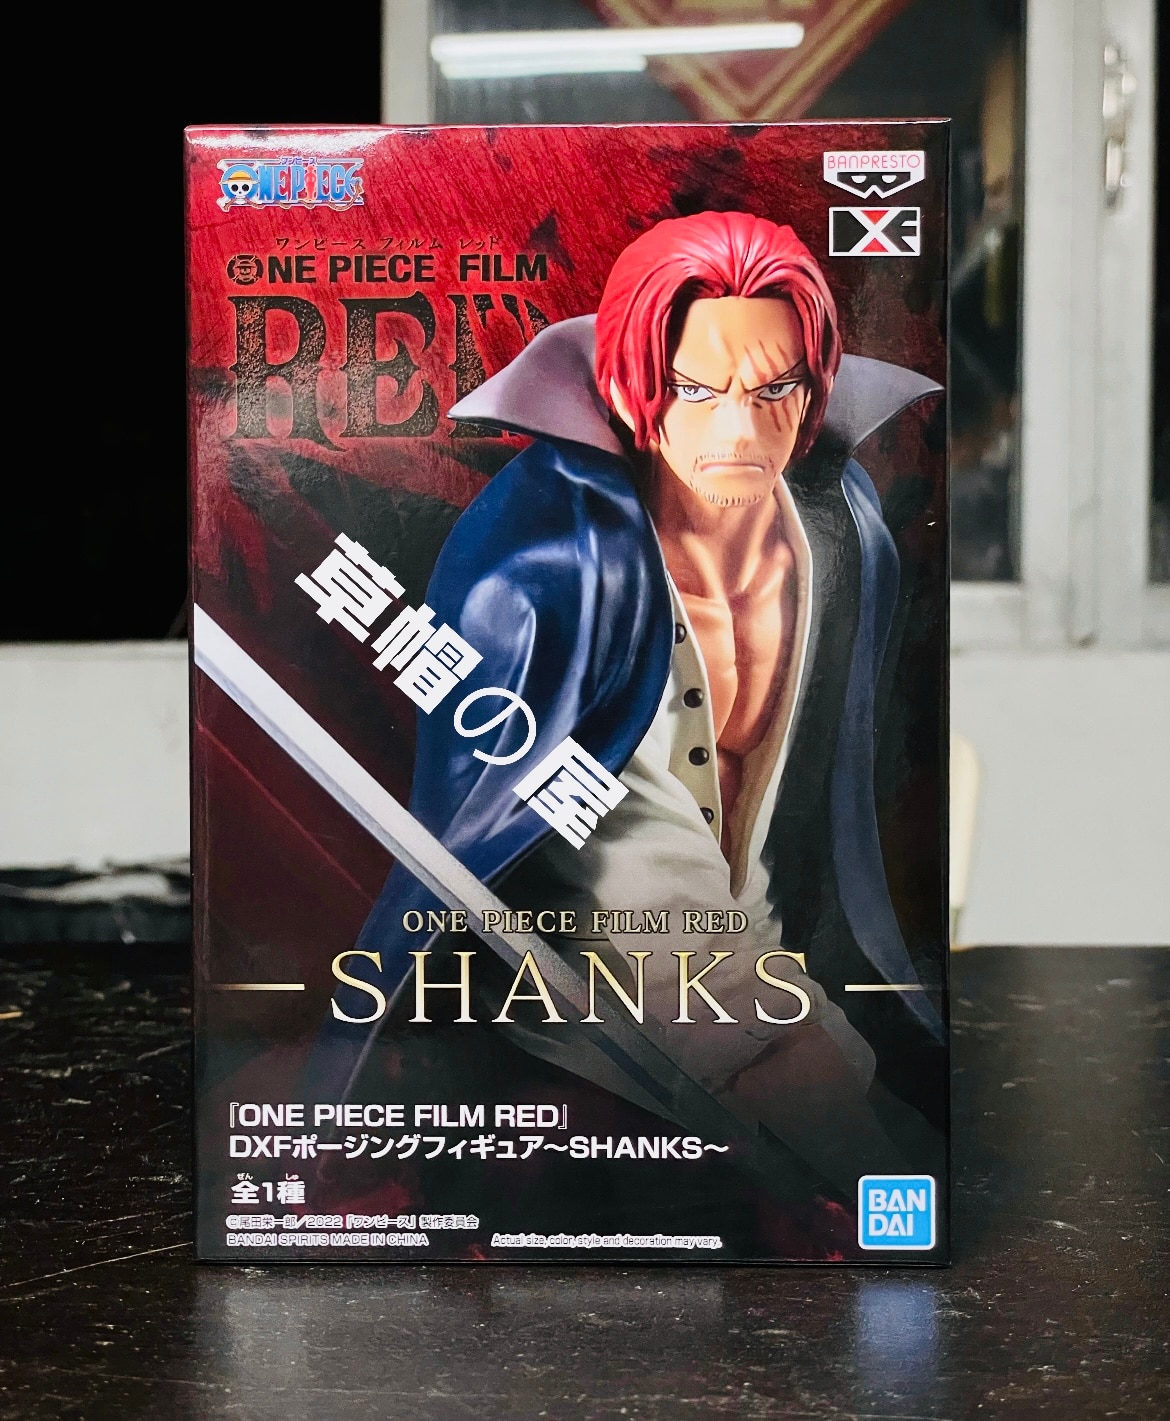 In Stock BANPRESTO ONE PIECE RED DXF Shanks 17Cm 100 Original PVC Anime Figure Action Figures 2 - One Piece Figure